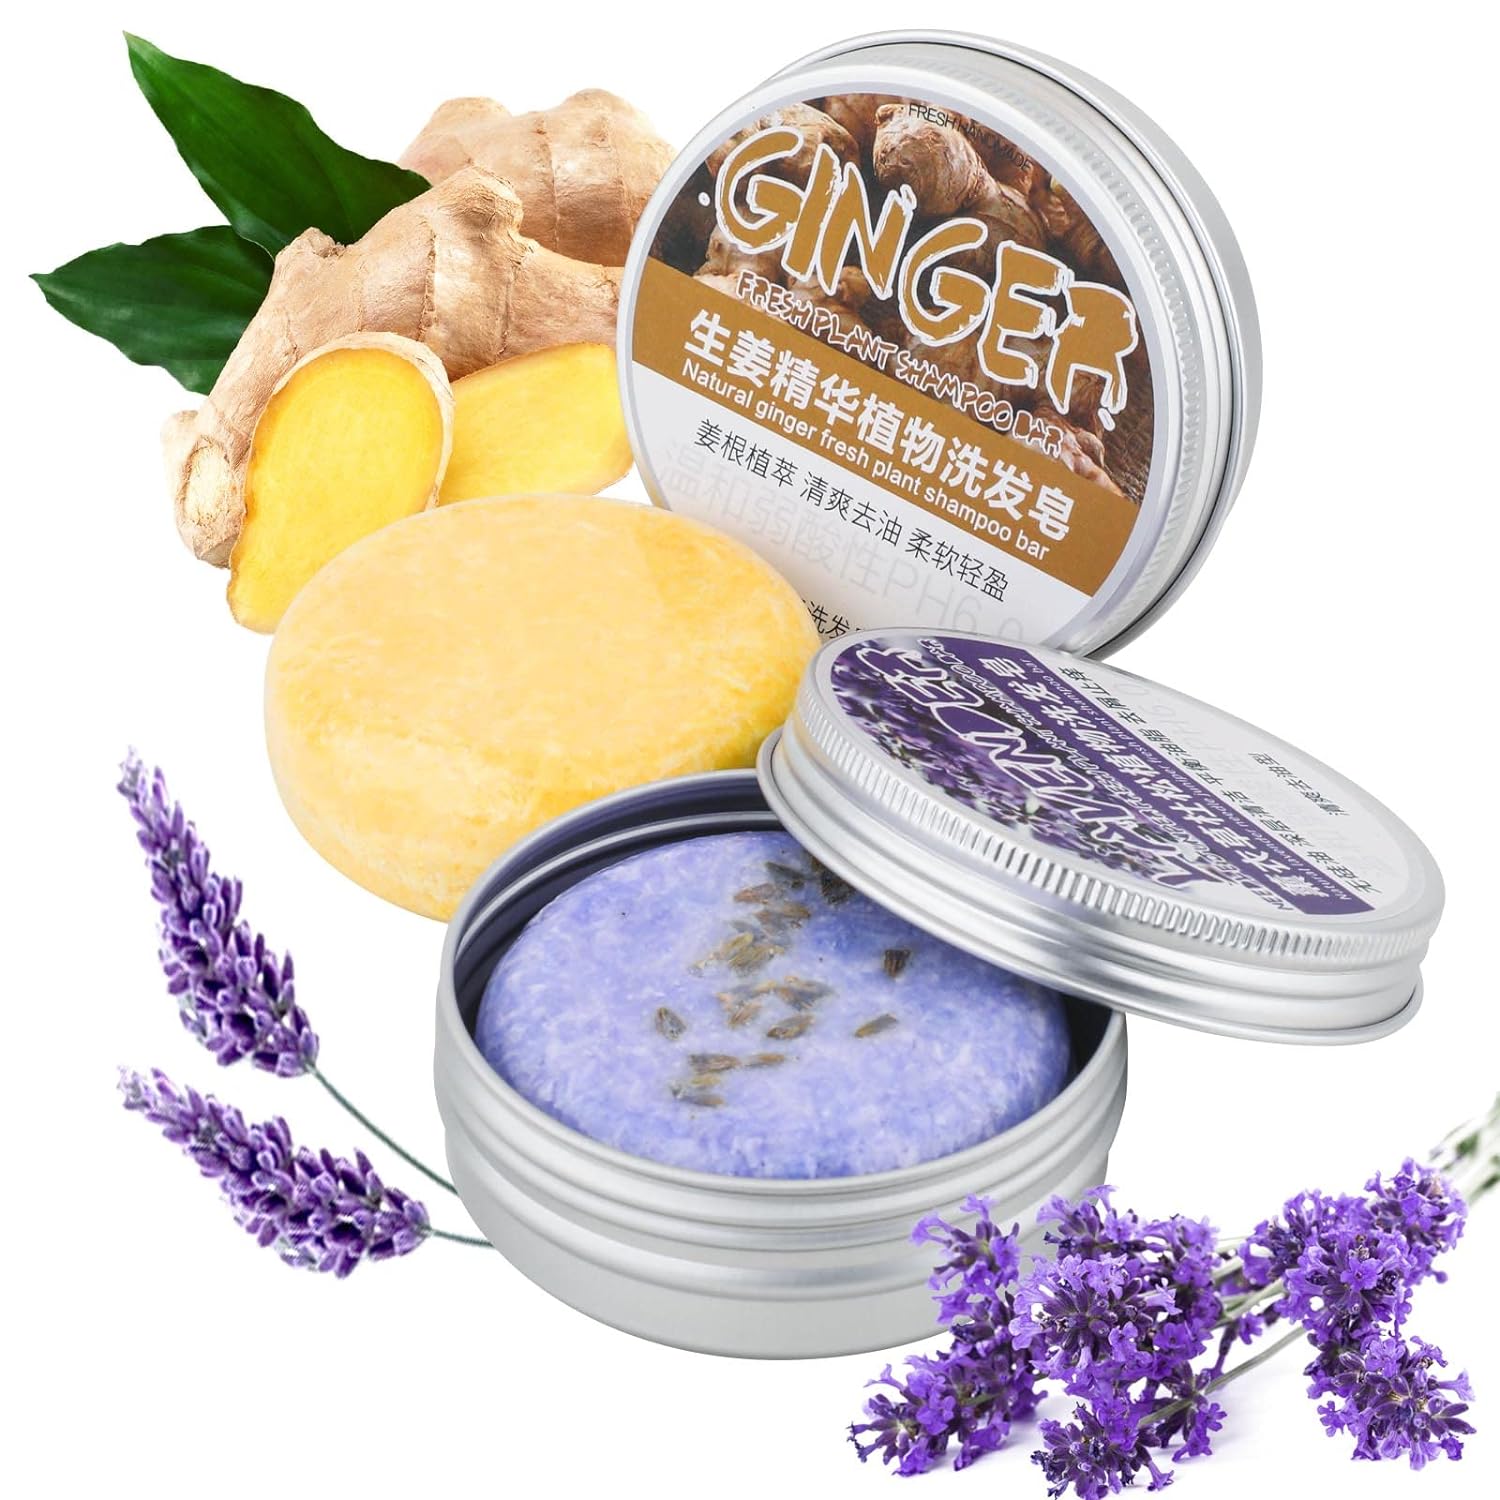 Shampoo-Bars-for-Hair-Growth,Natural-Organic-Lavender-465